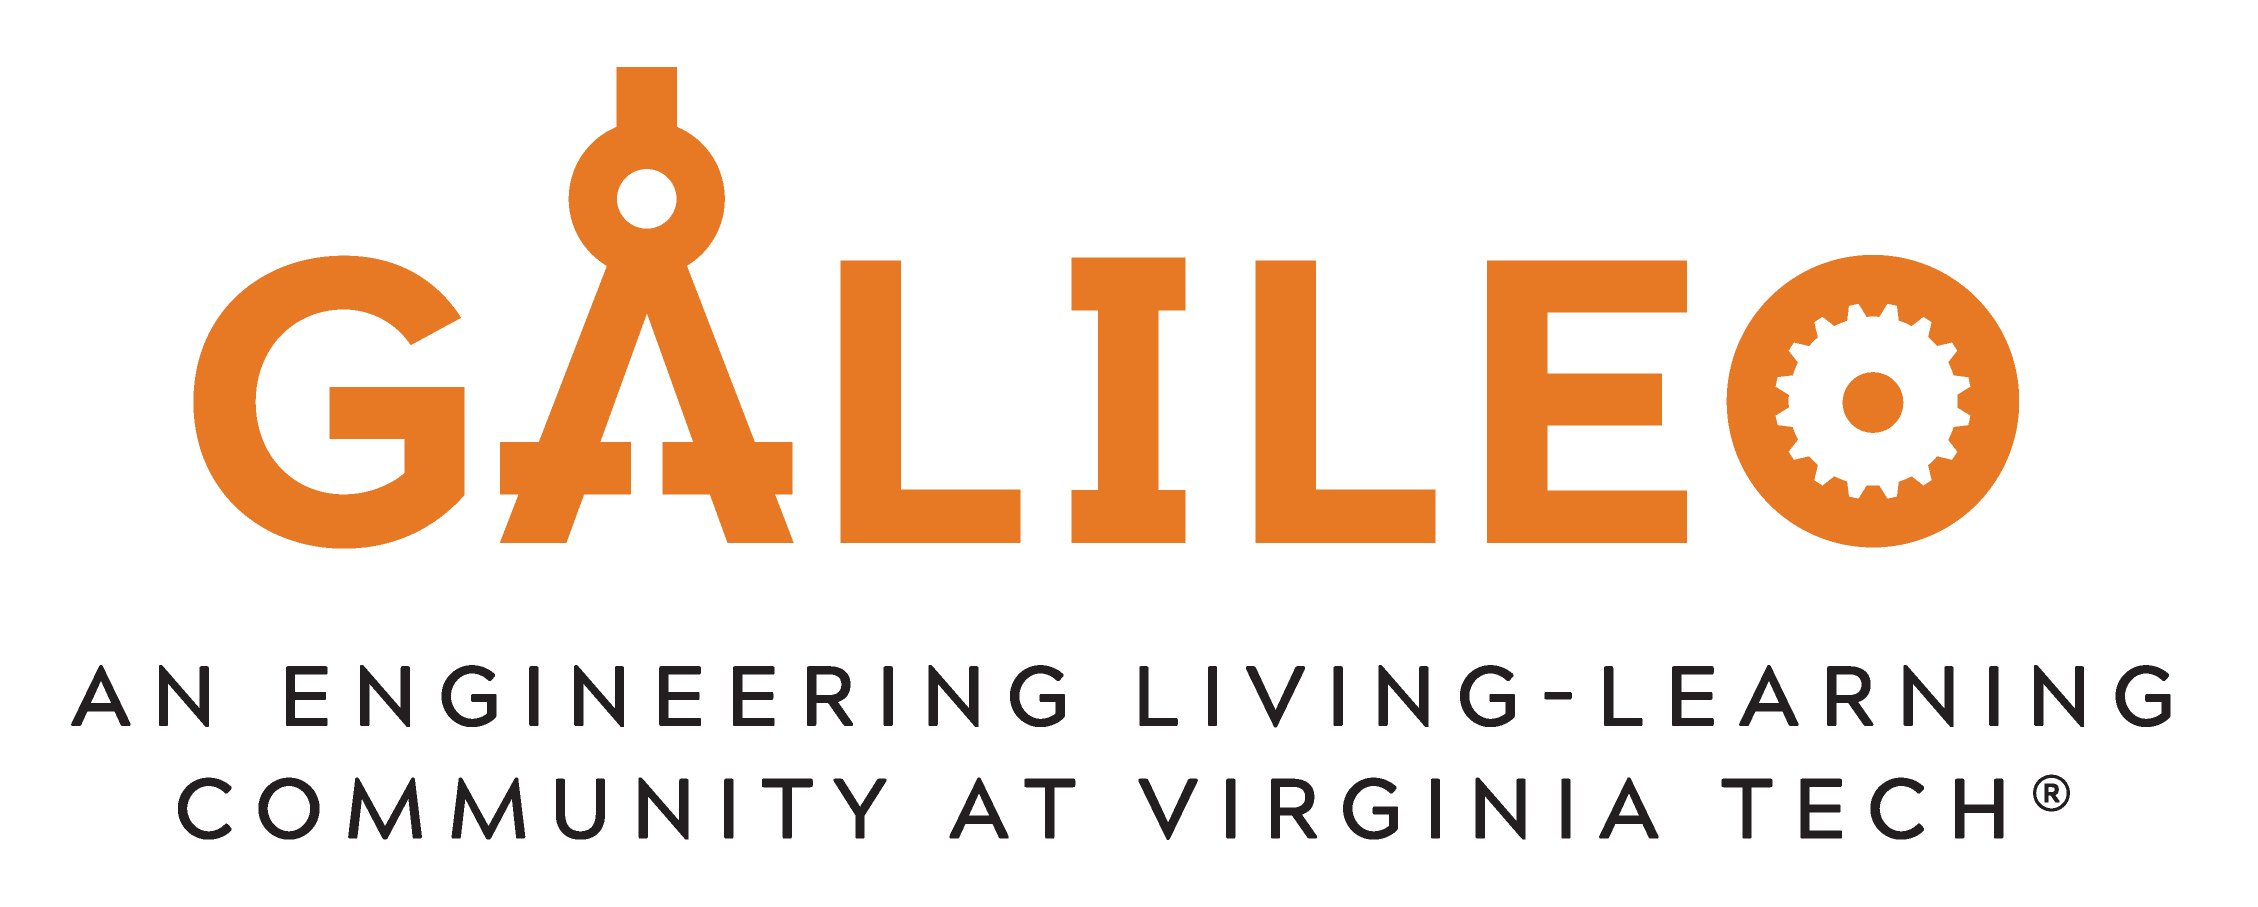 Galileo LLC at Virginia Tech logo